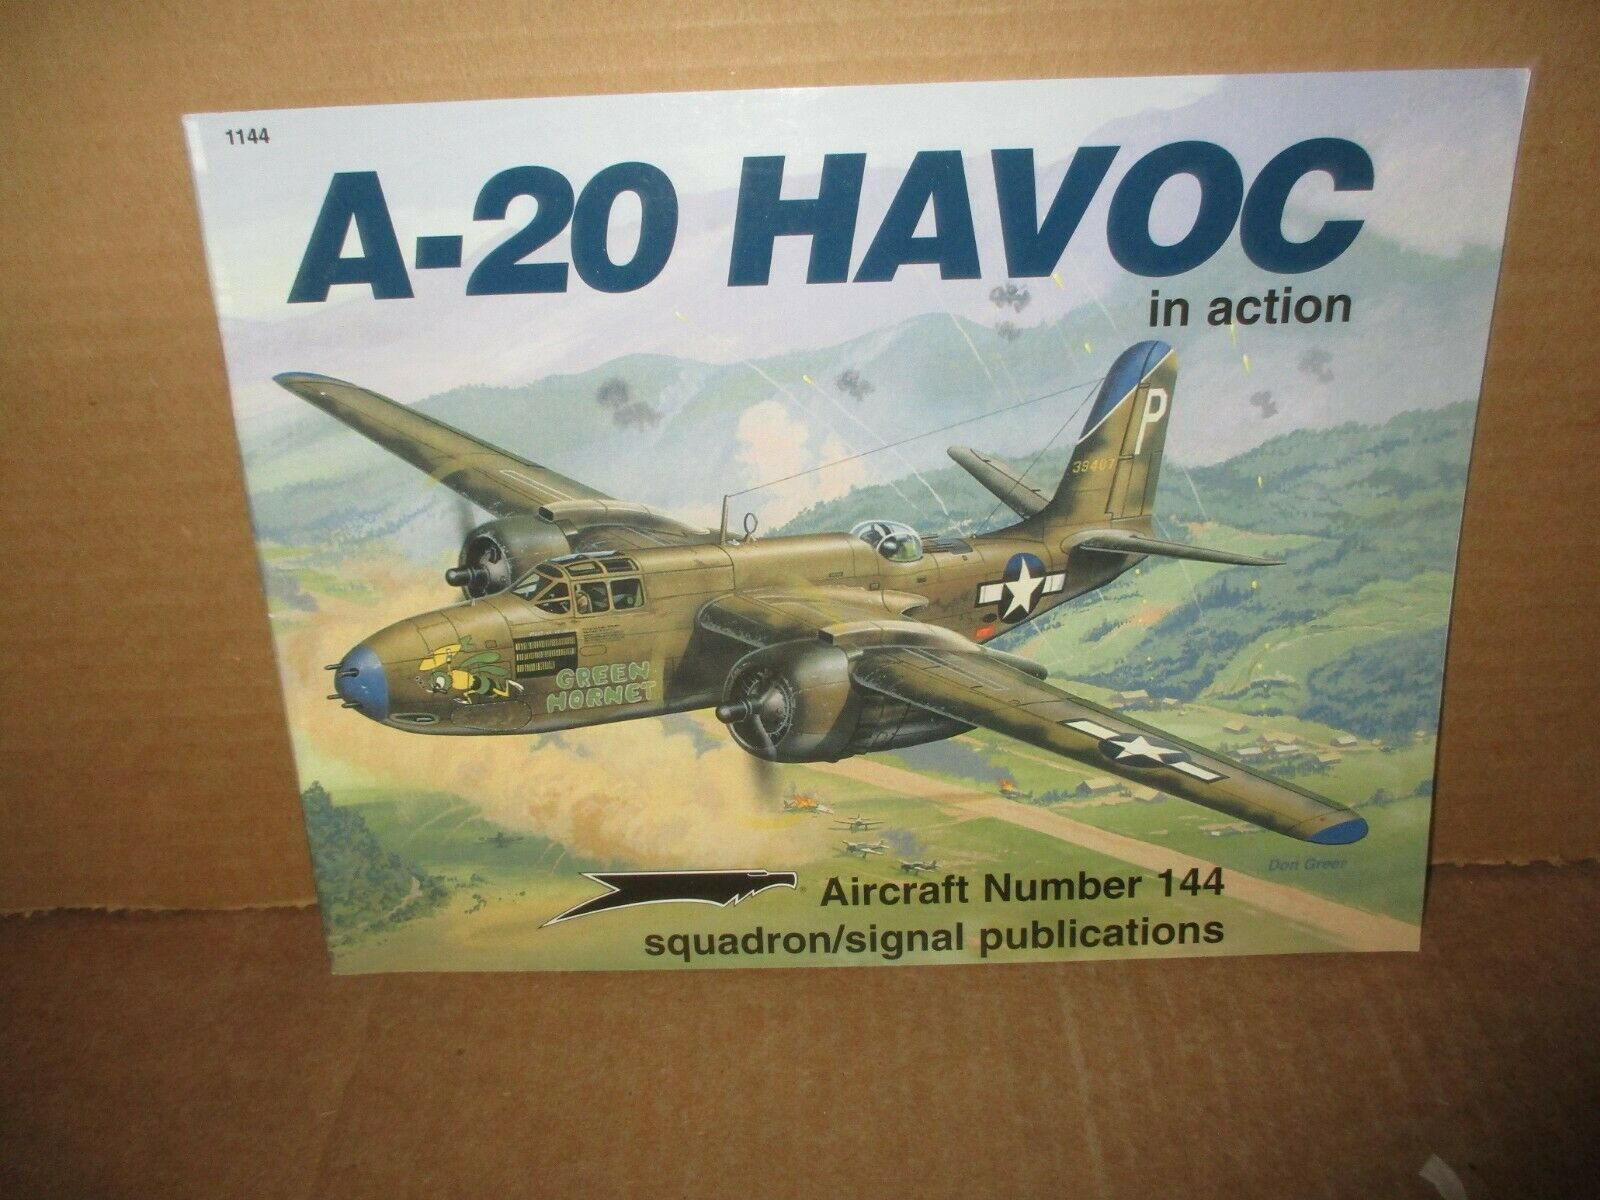 Douglas A-20 Havoc Wallpapers